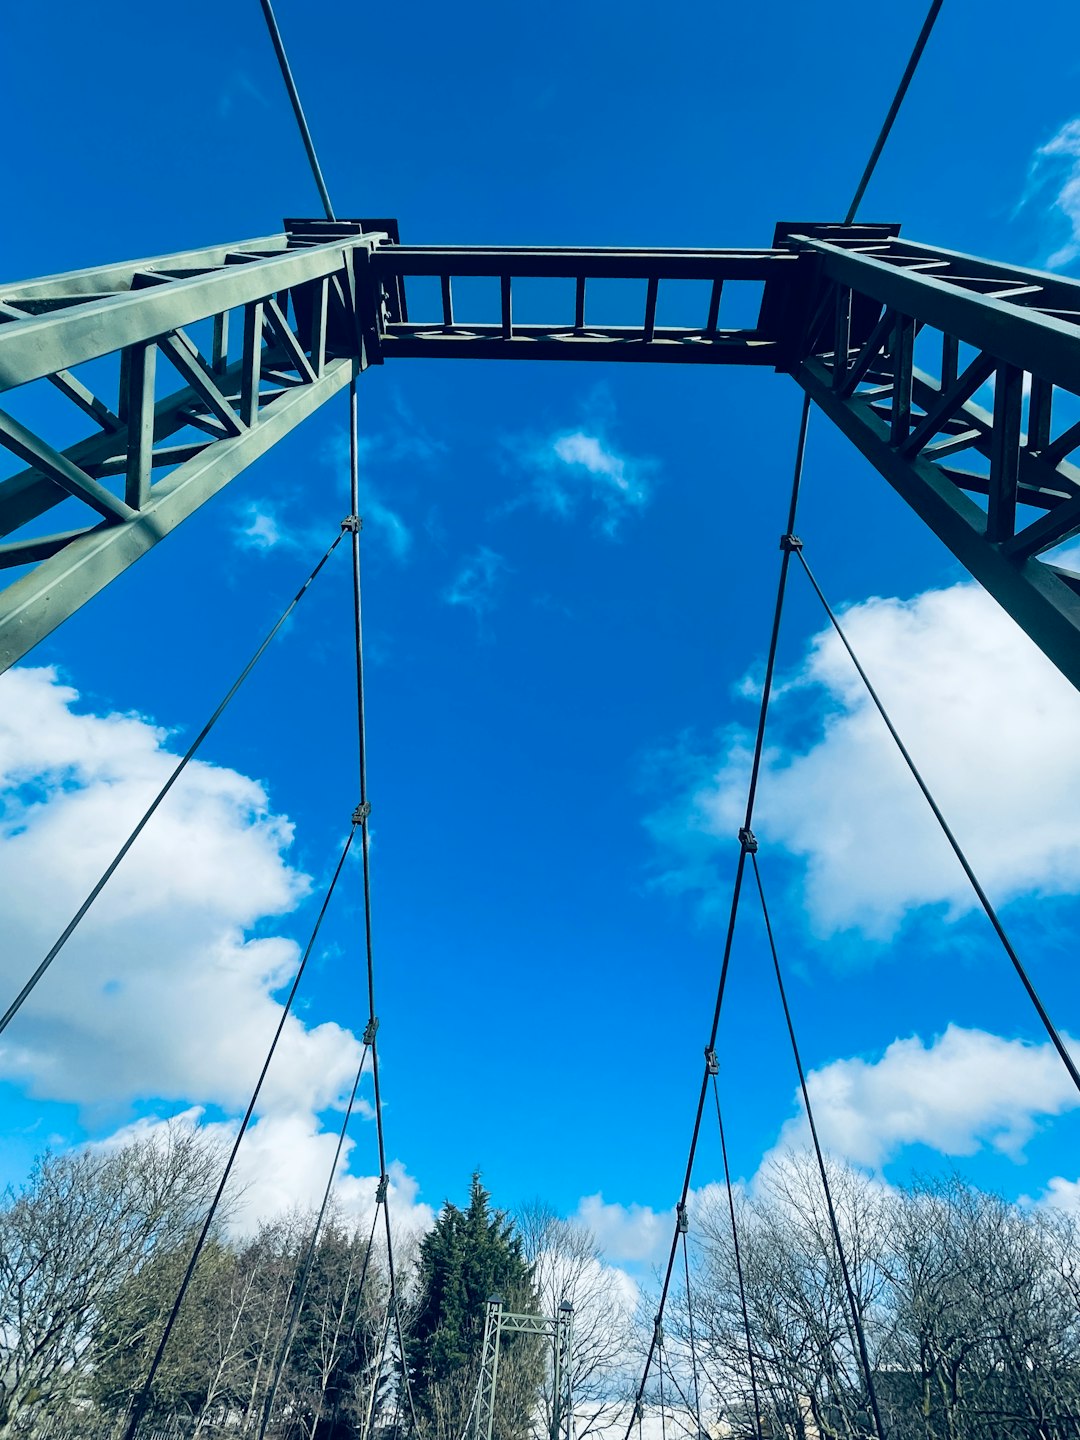 black metal bridge under blue sky during daytime